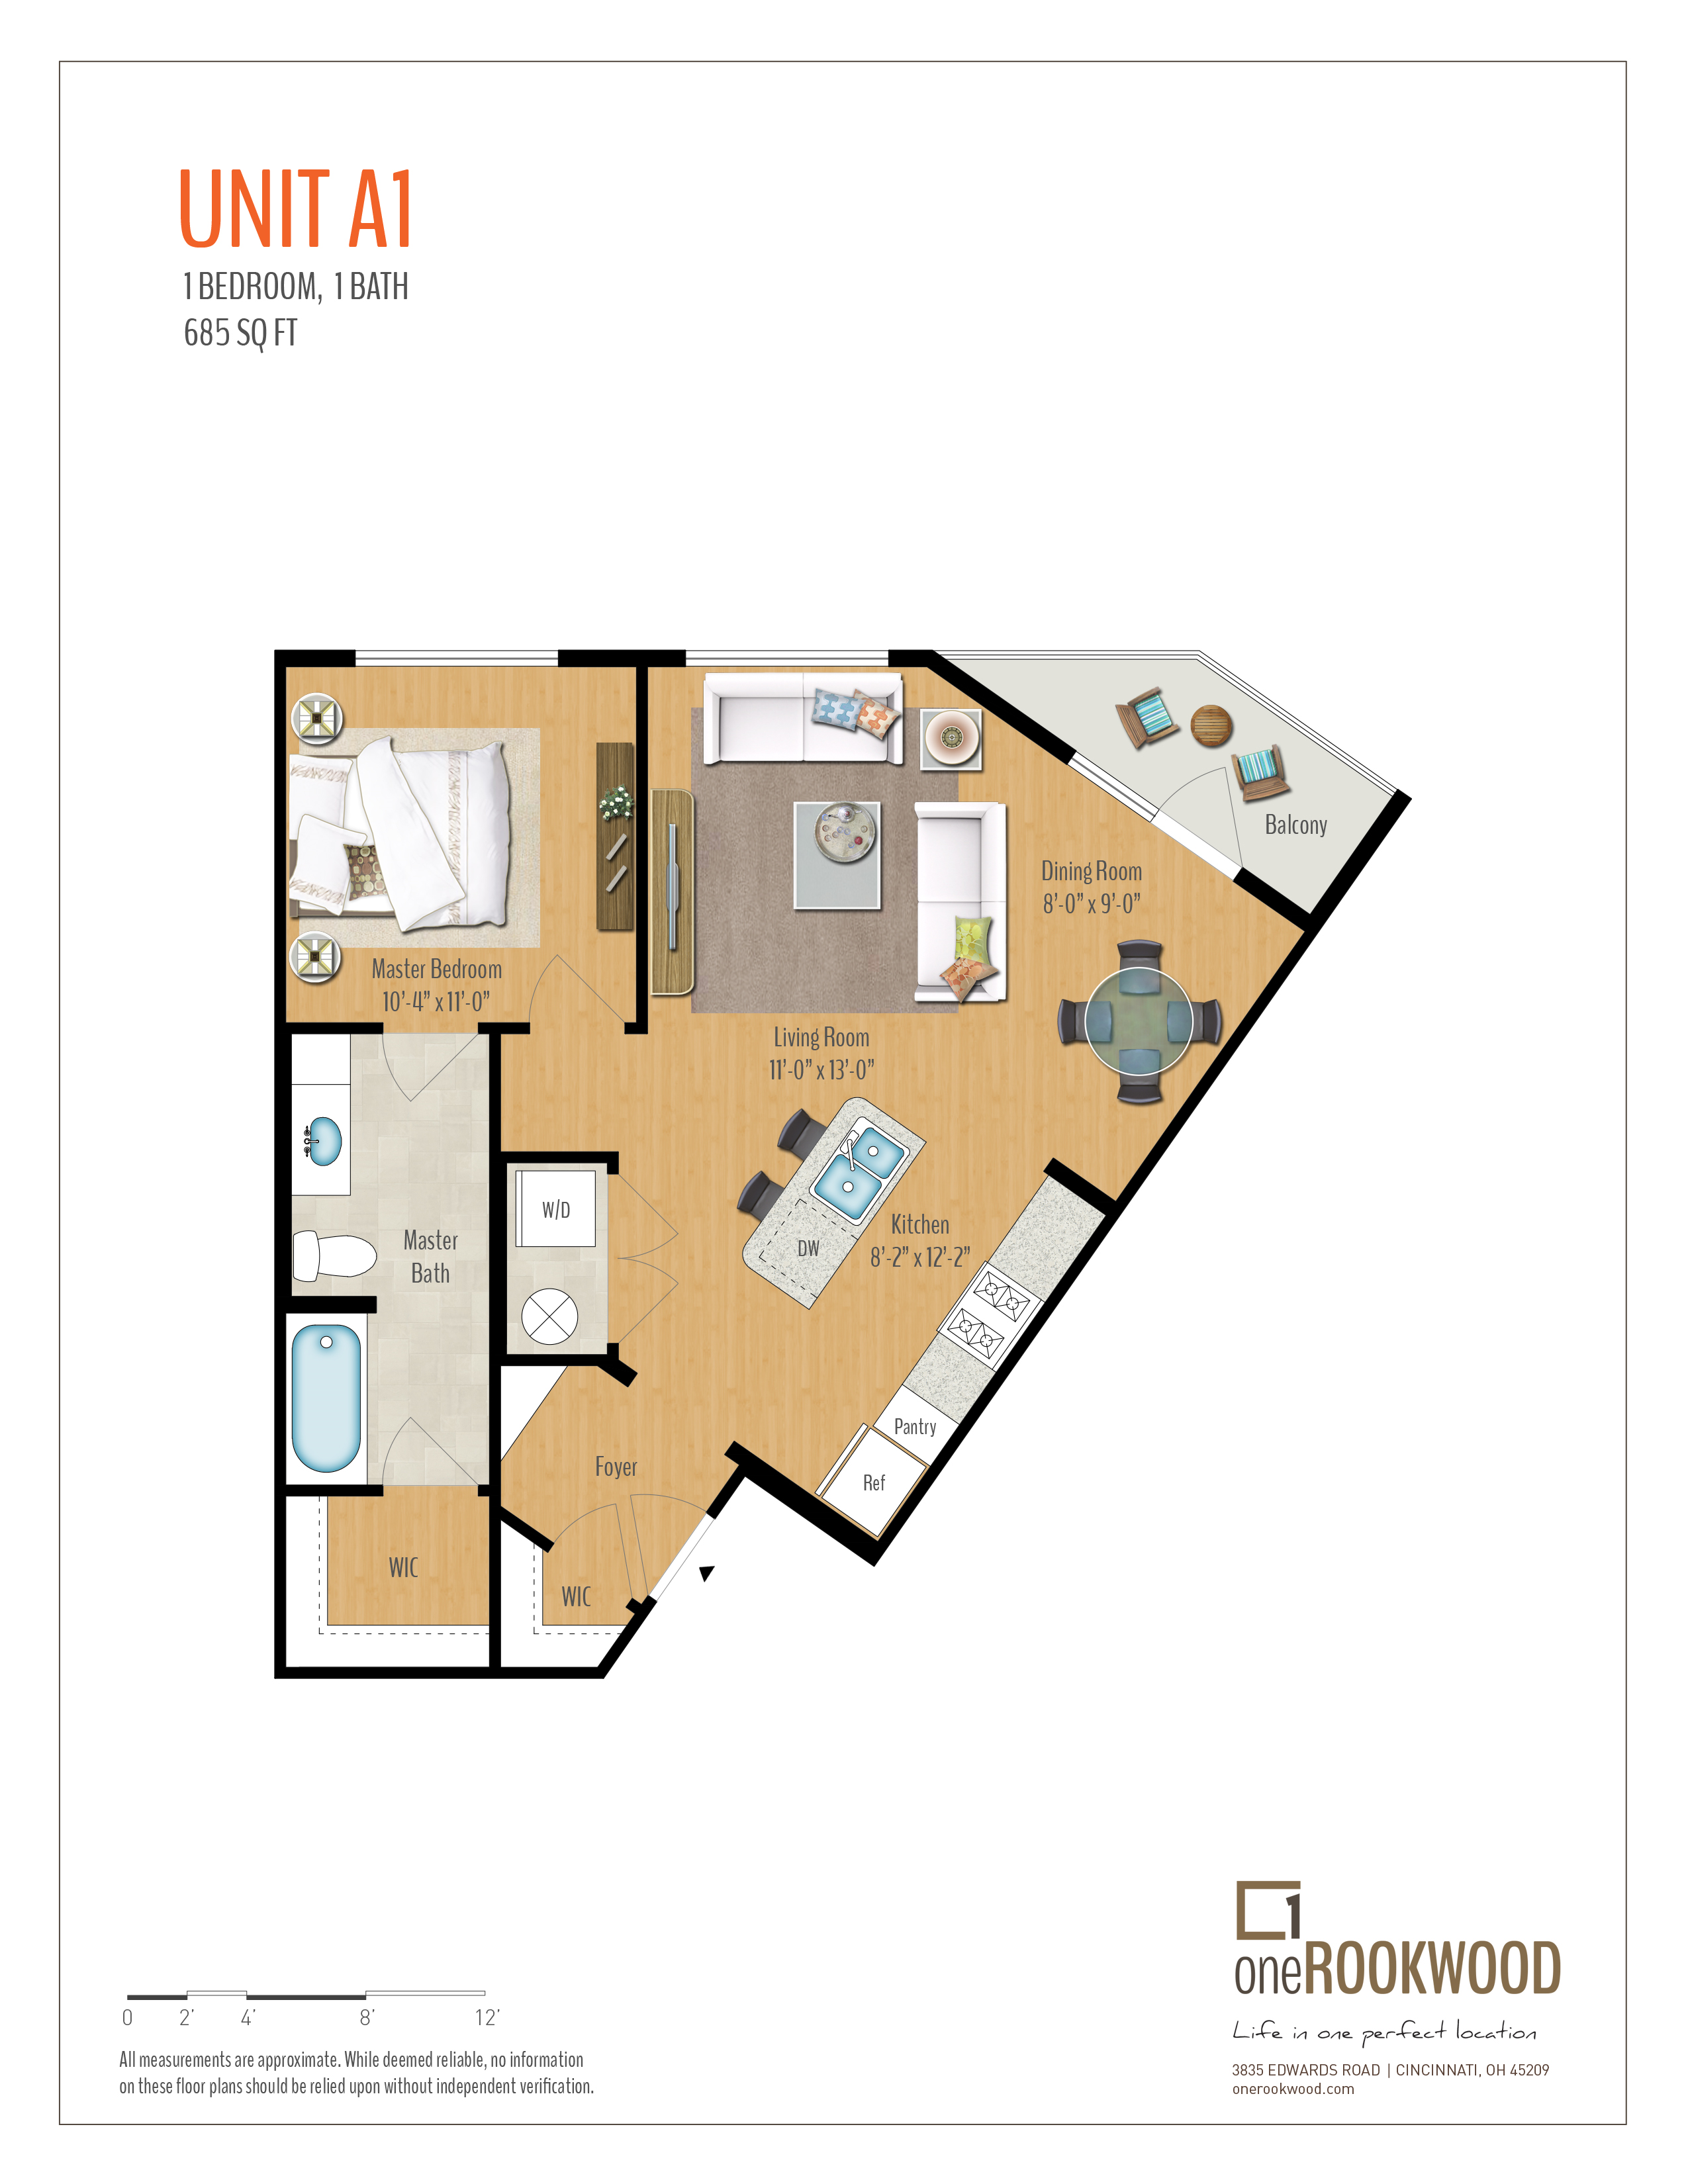 OneRookwood-Unit A1-FloorPlan-Print.jpg